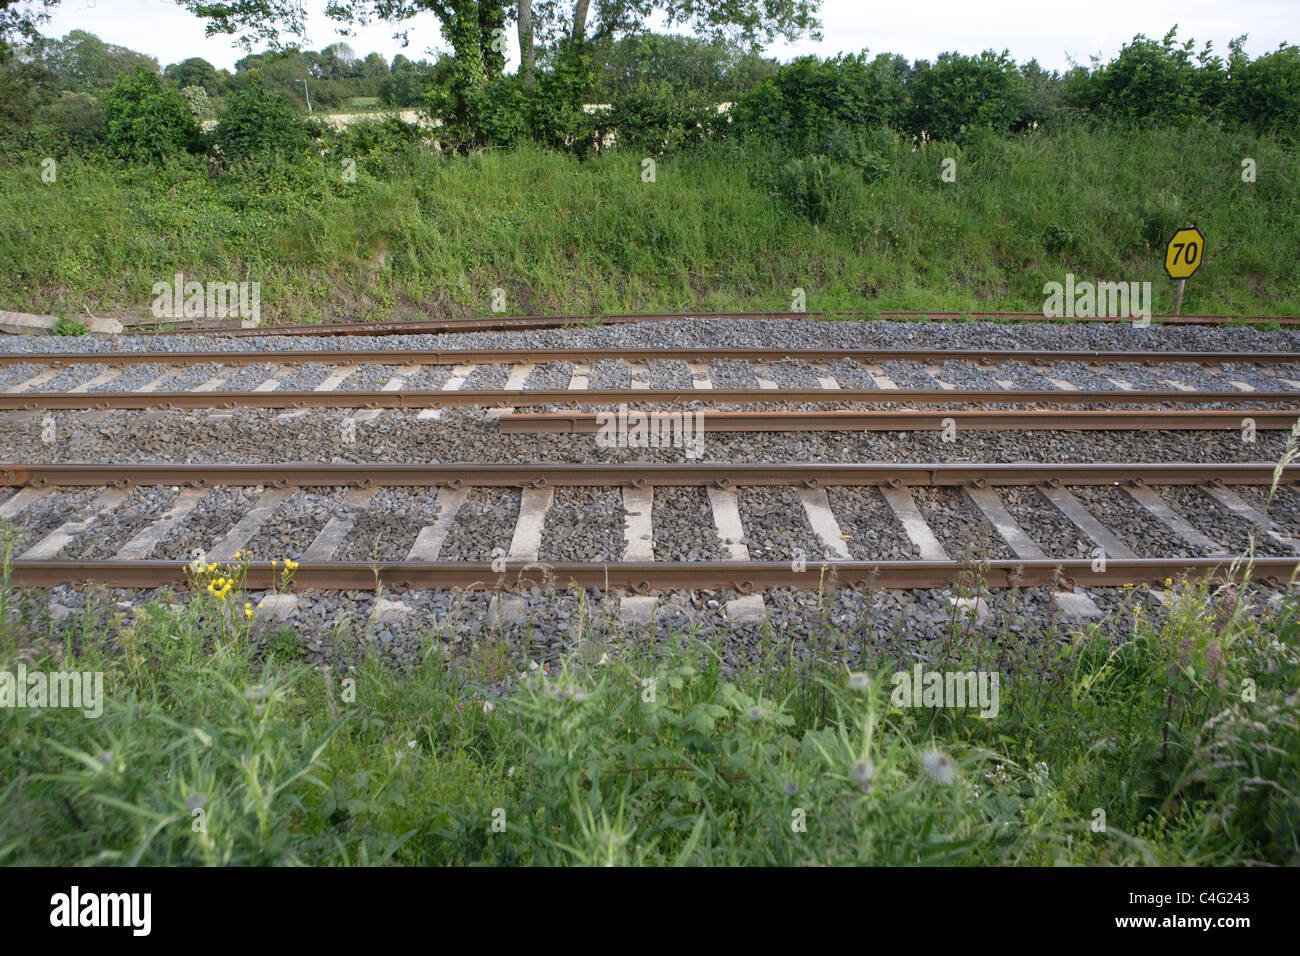 NI Railways, also known as Northern Ireland Railways (NIR) and for a brief period Ulster Transport Railways (UTR), is the railwa Stock Photo